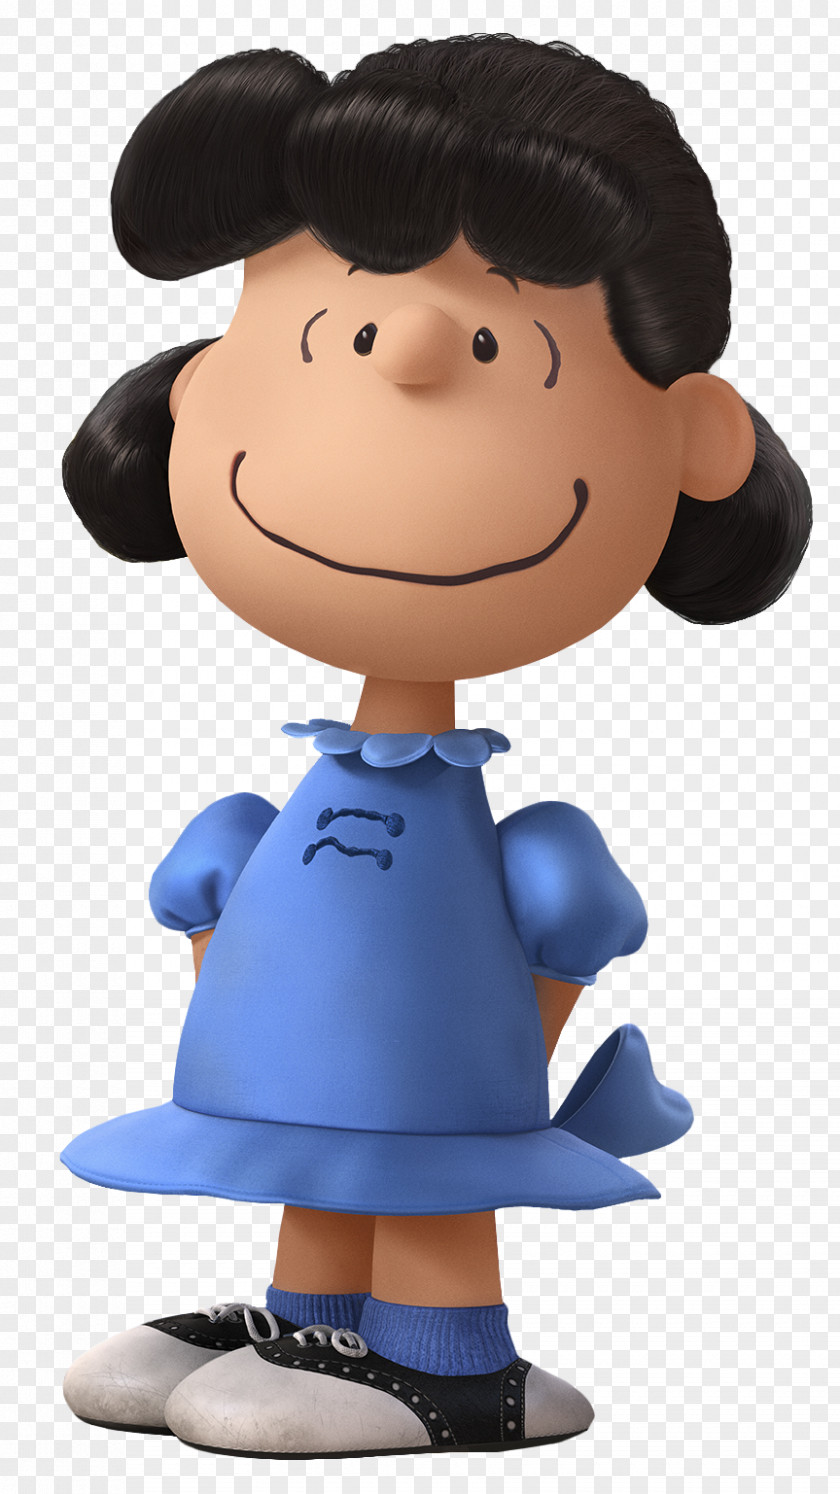 Lucy The Peanuts Movie Transparent Cartoon Van Pelt Charlie Brown Sally Snoopy Linus PNG